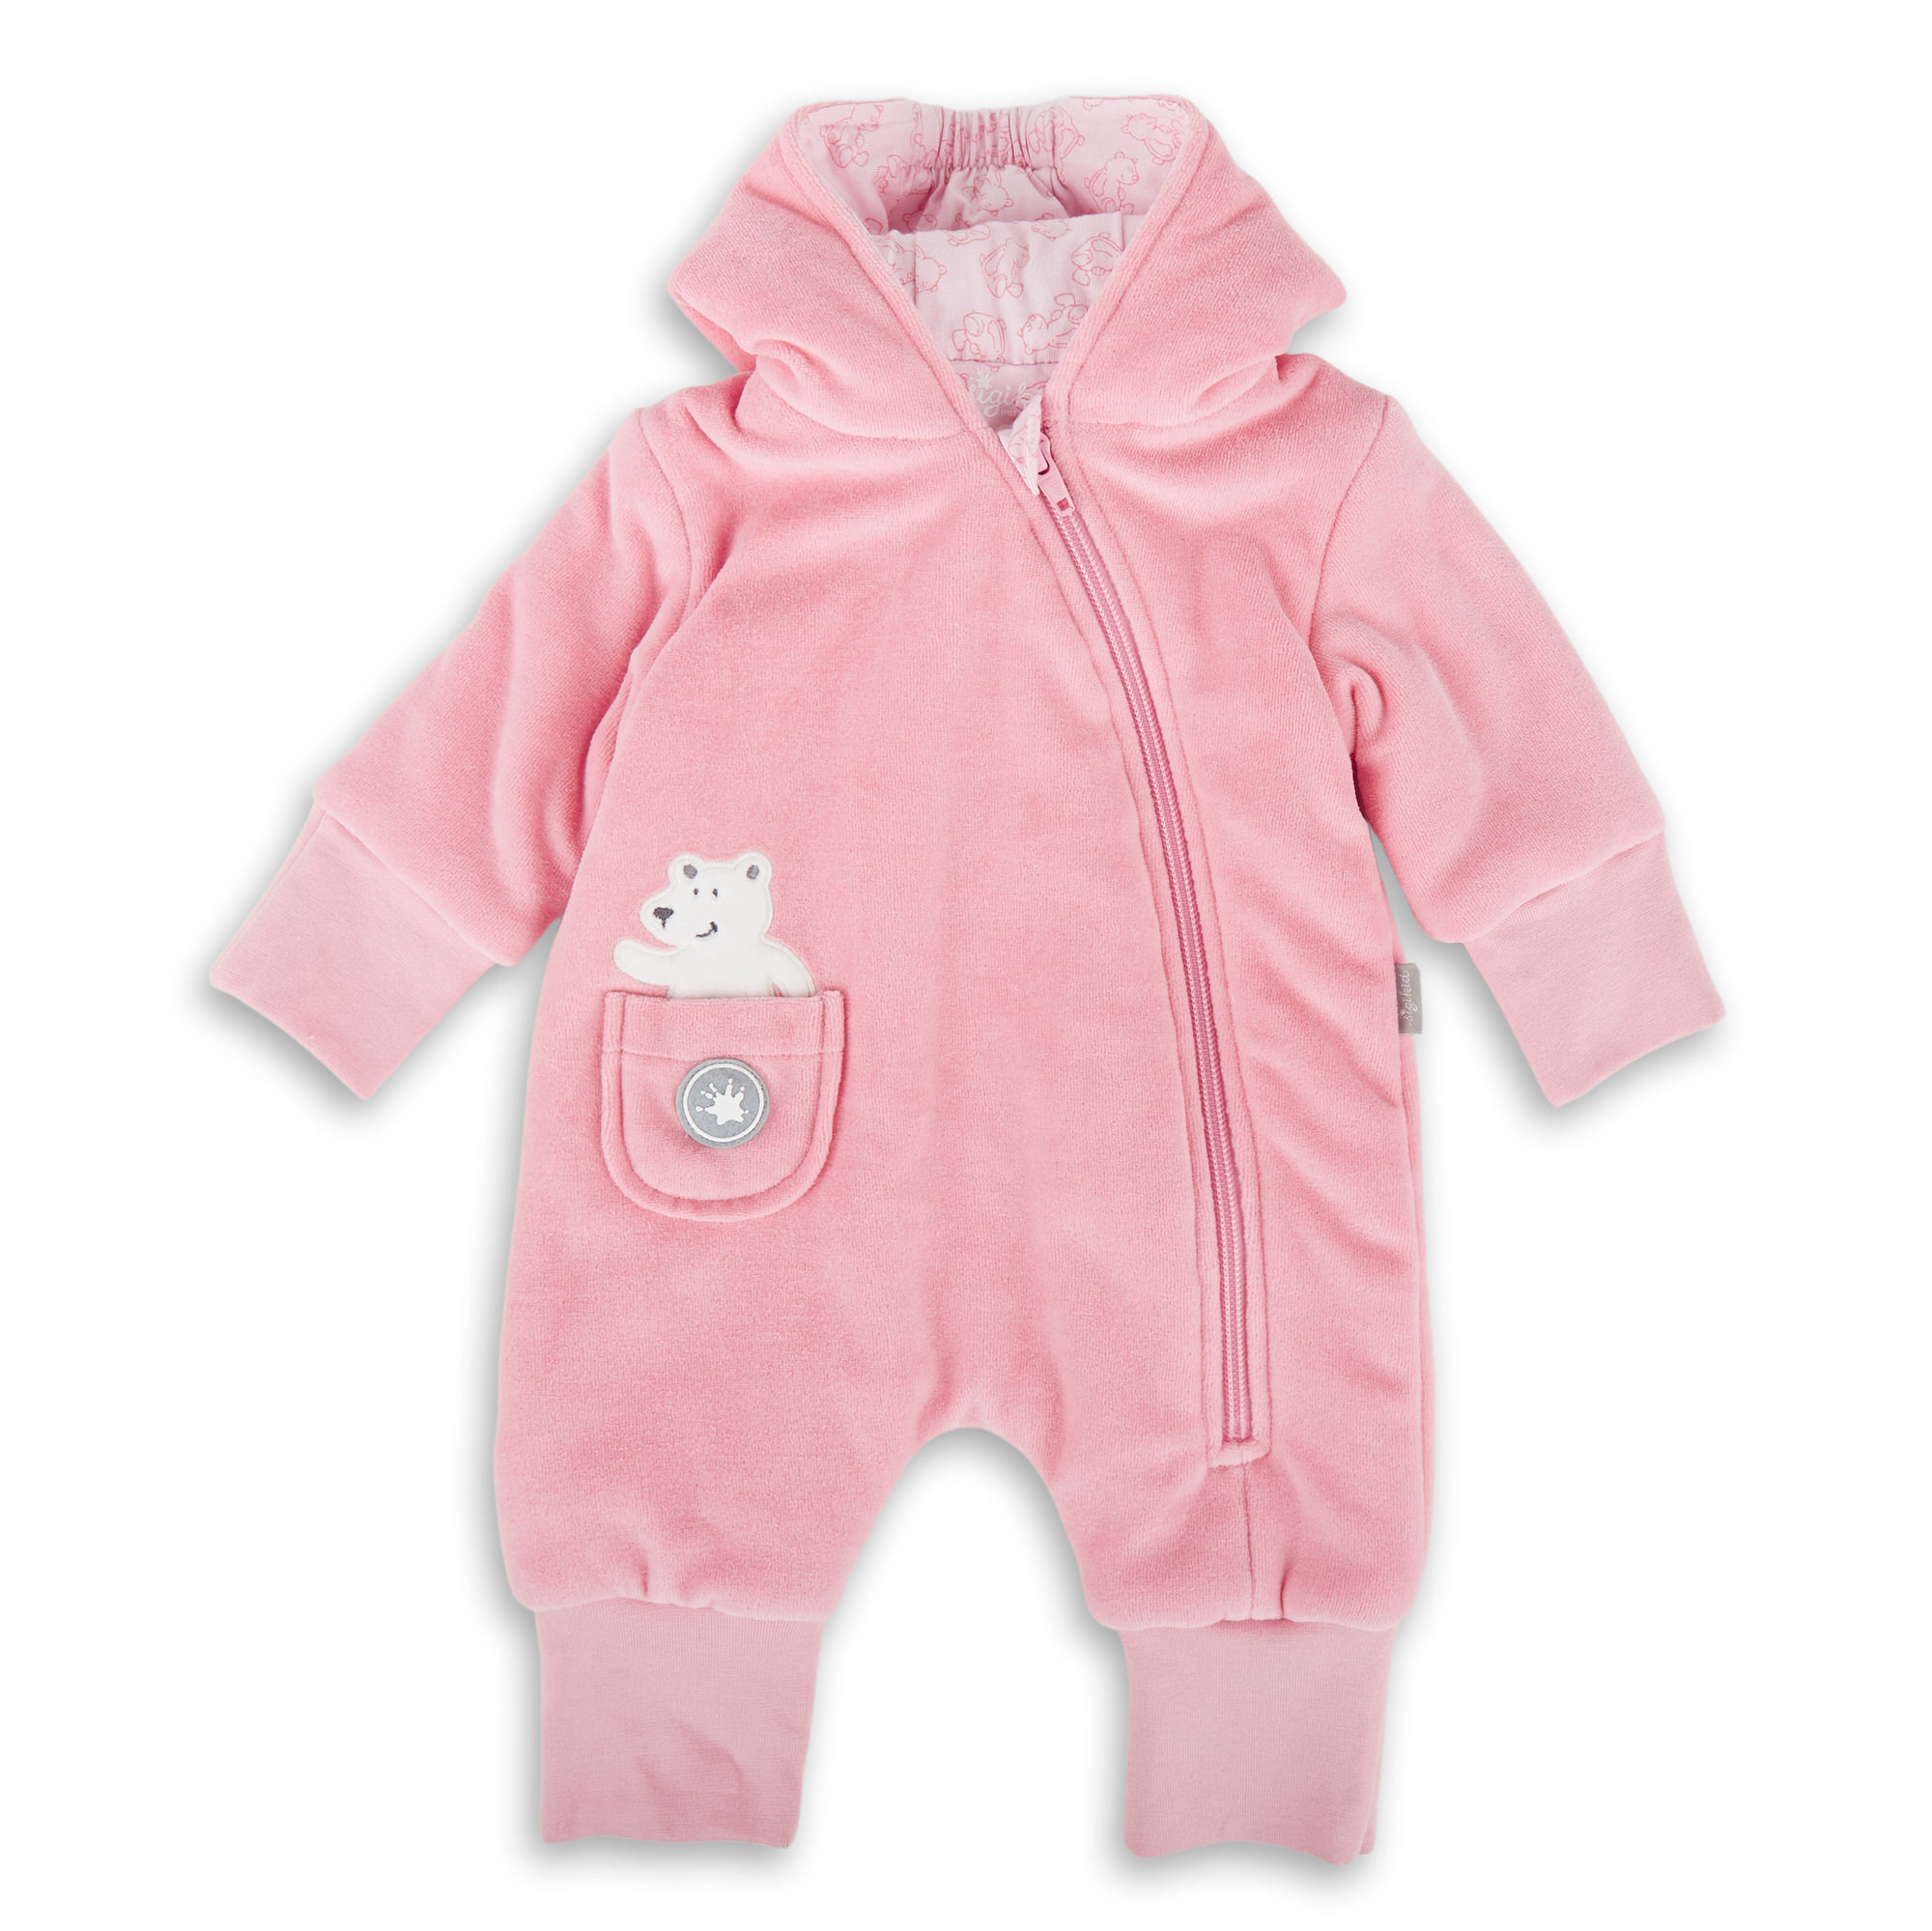 Hooded baby girl velour overall polar bear, pink, lined